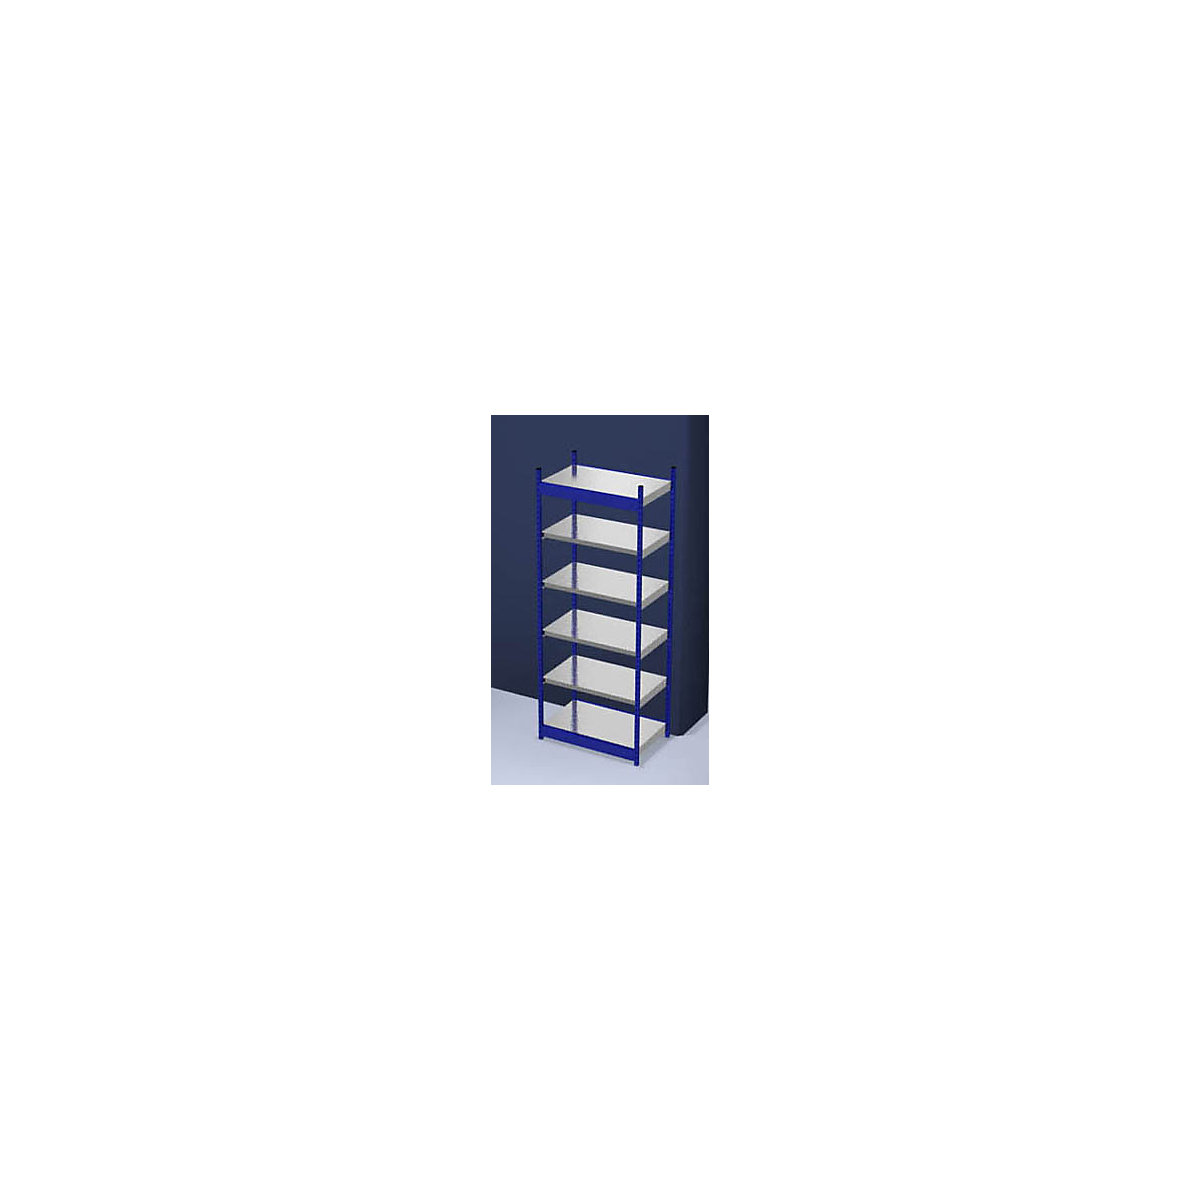 Stable boltless shelf unit, single sided – hofe, shelf unit height 2500 mm, blue / zinc-plated, shelf width 1025 mm, basic shelf unit, width x depth 1025 x 600 mm-10